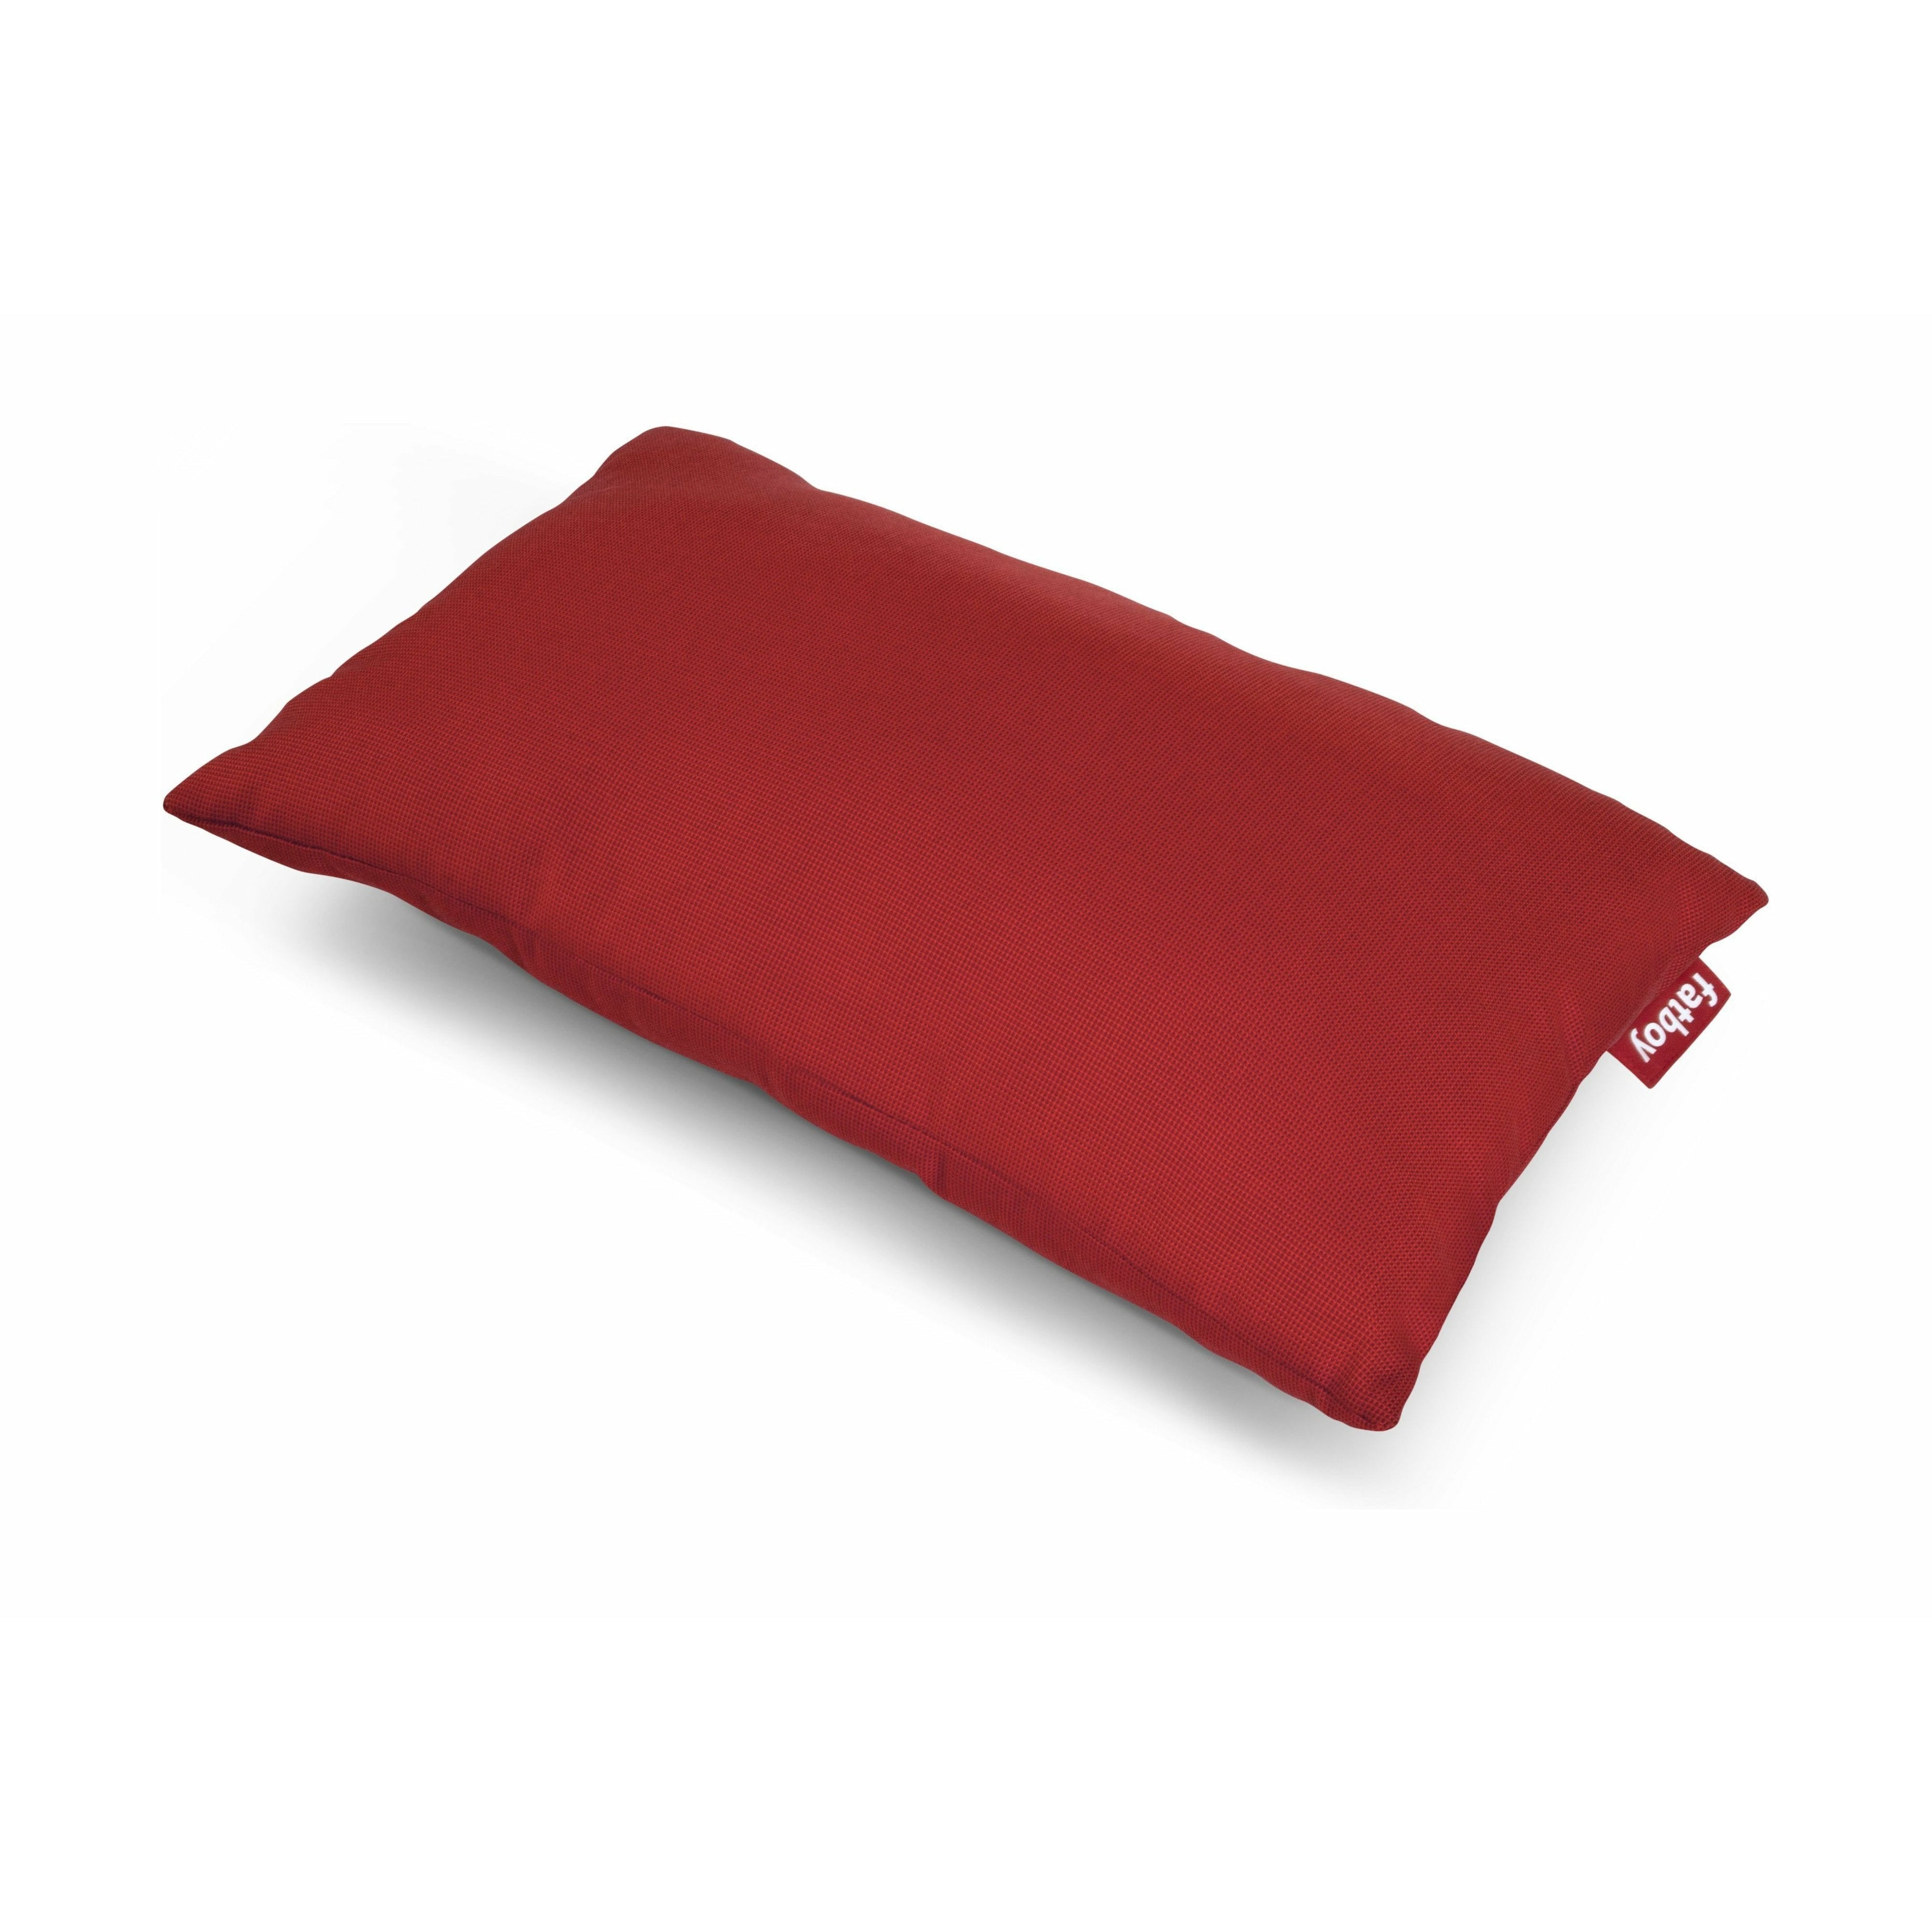 Fatboy Pillow King Outdoor, rød